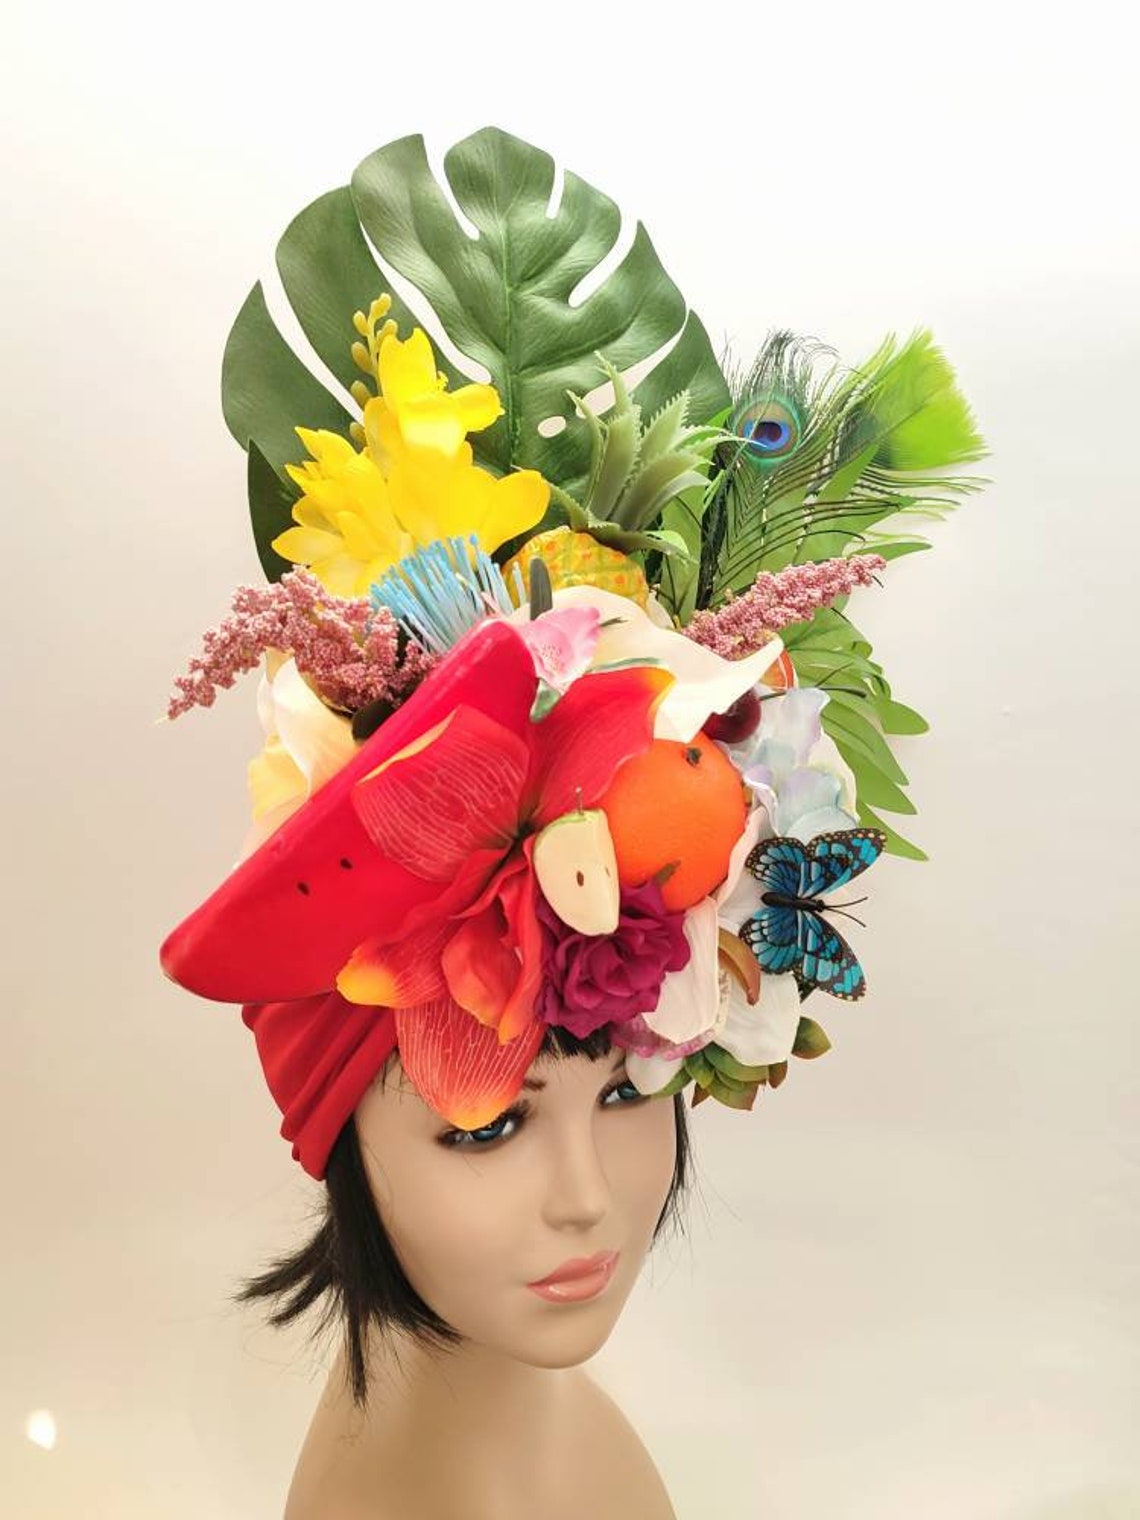 Large fruit headdress Jungle headdress Carmen Miranda turban | Etsy